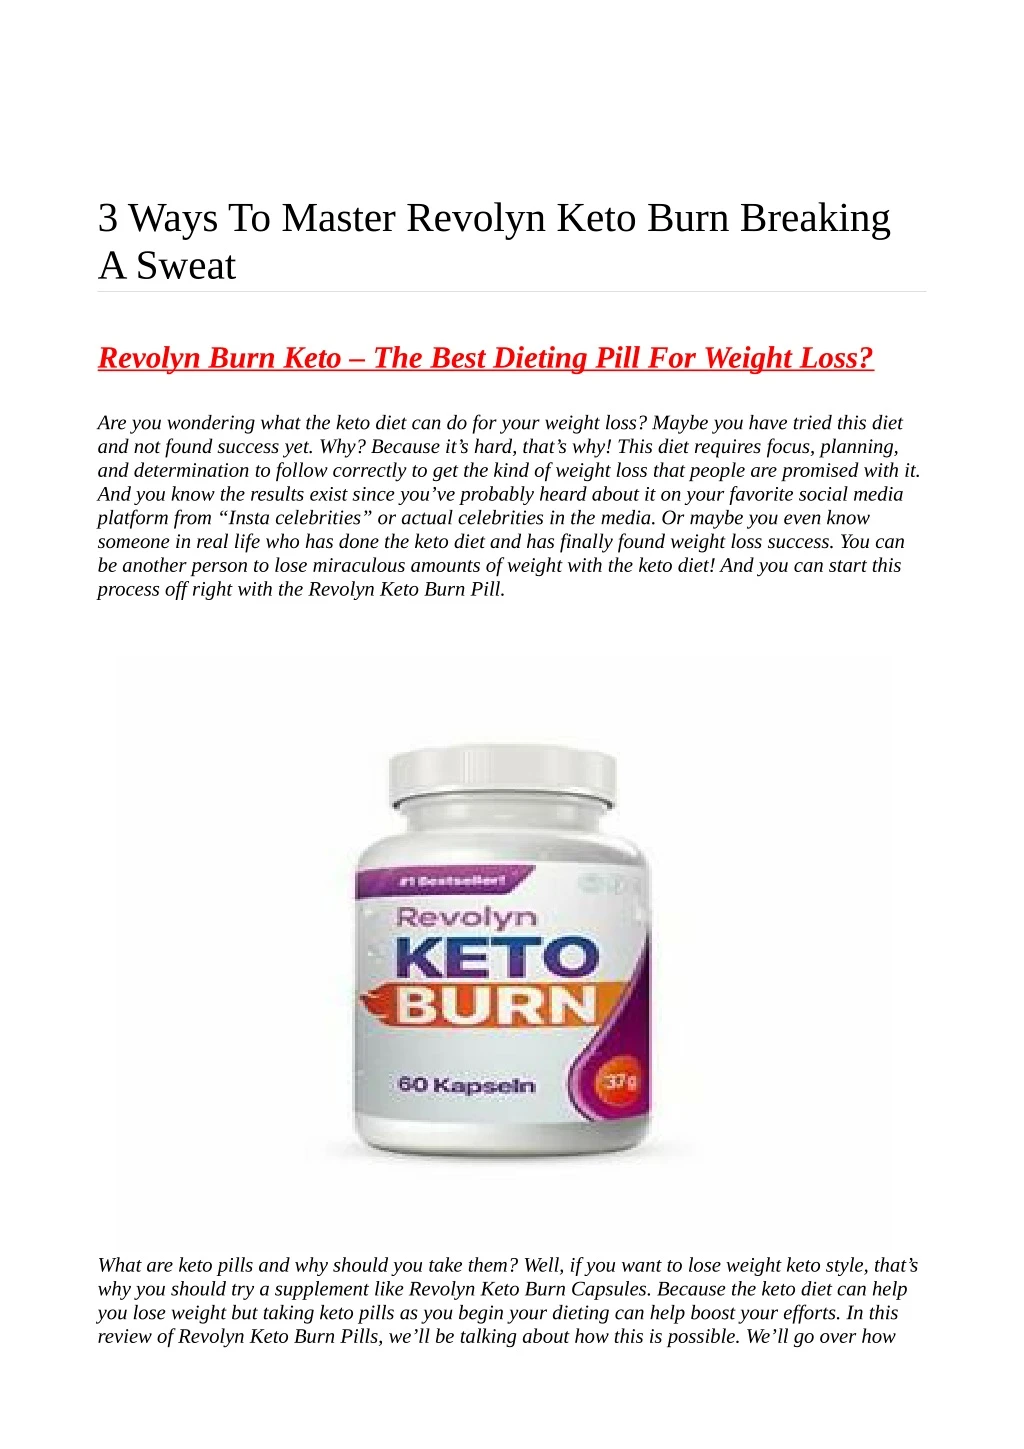 3 ways to master revolyn keto burn breaking